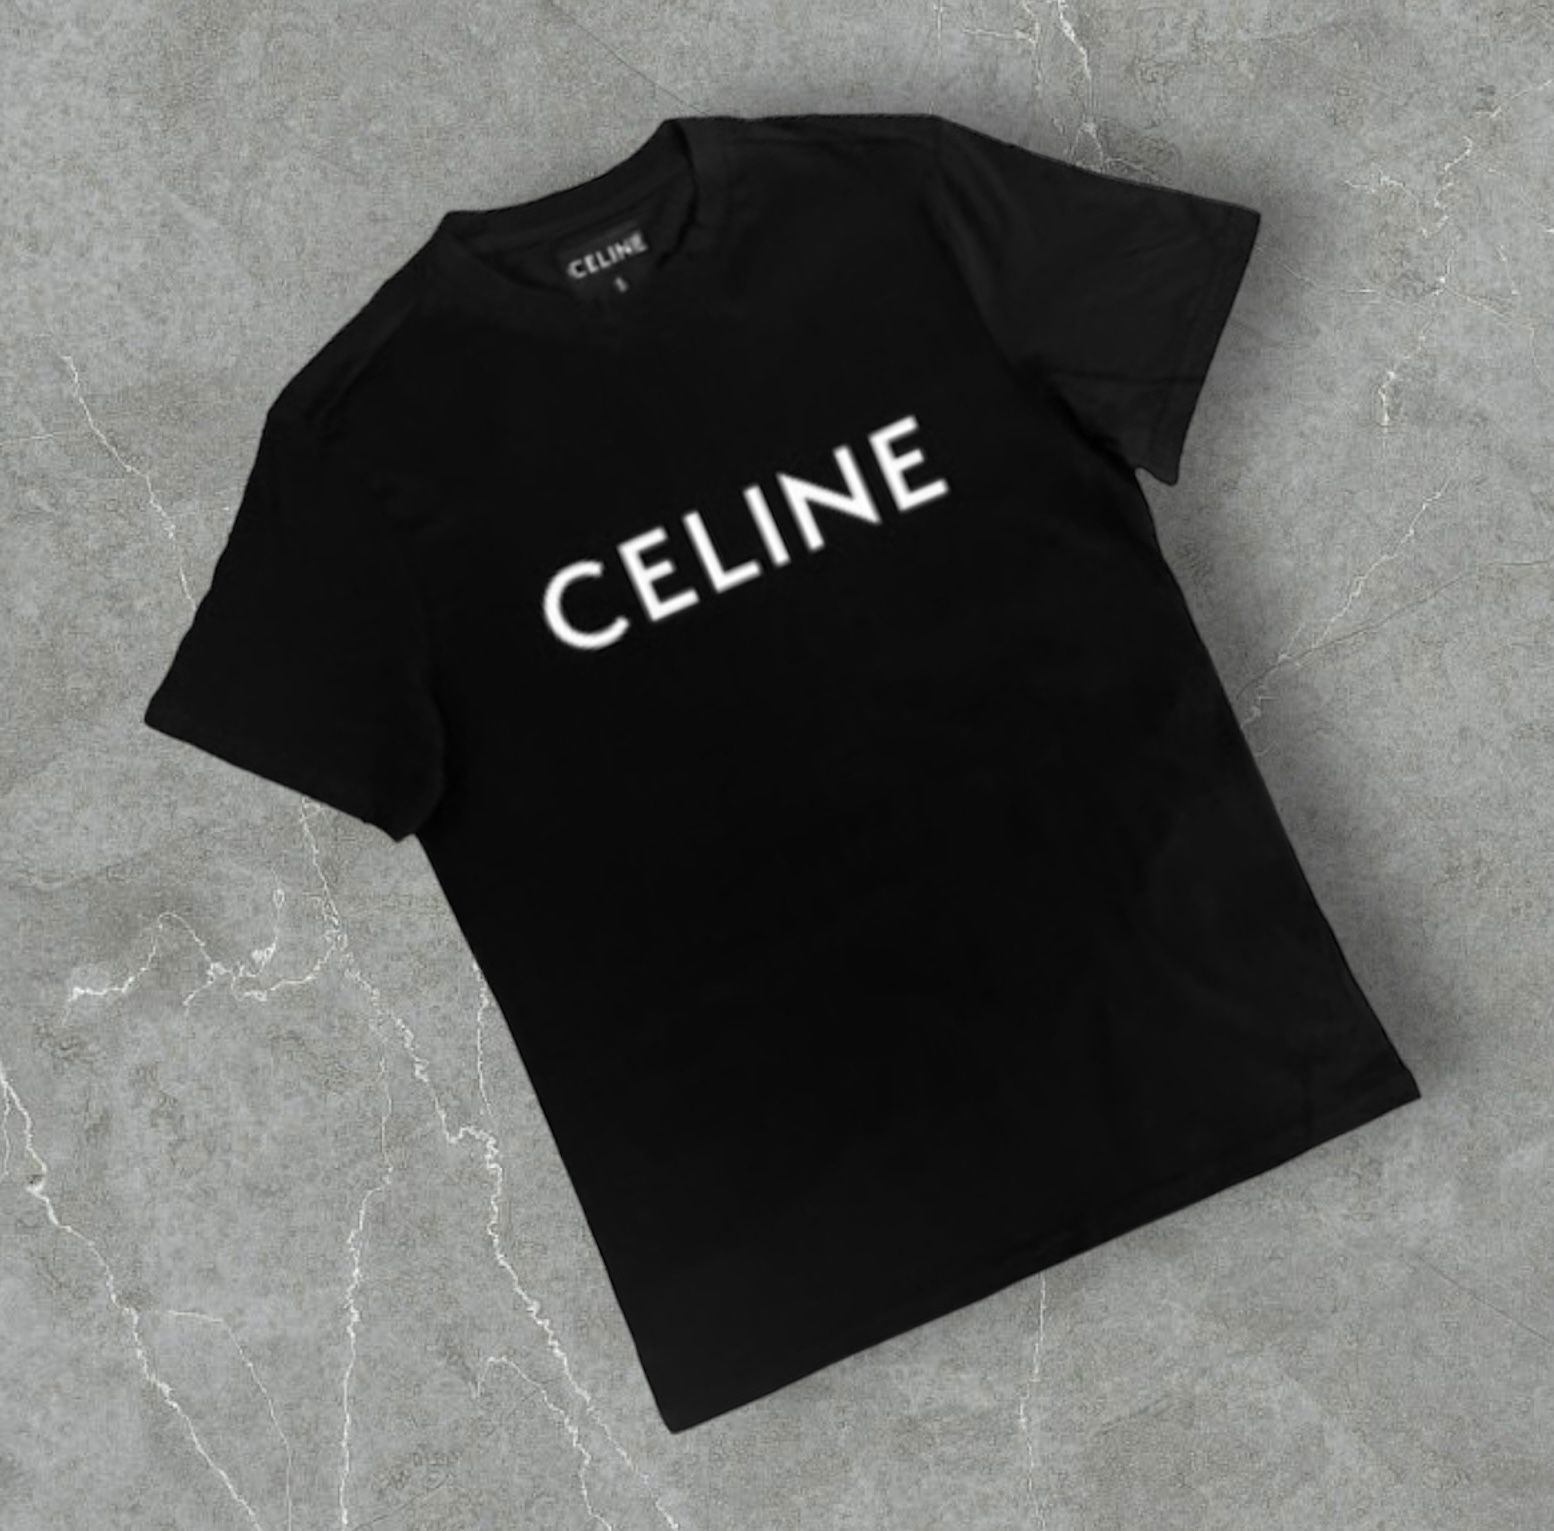 Celine Tshirt Black And White 